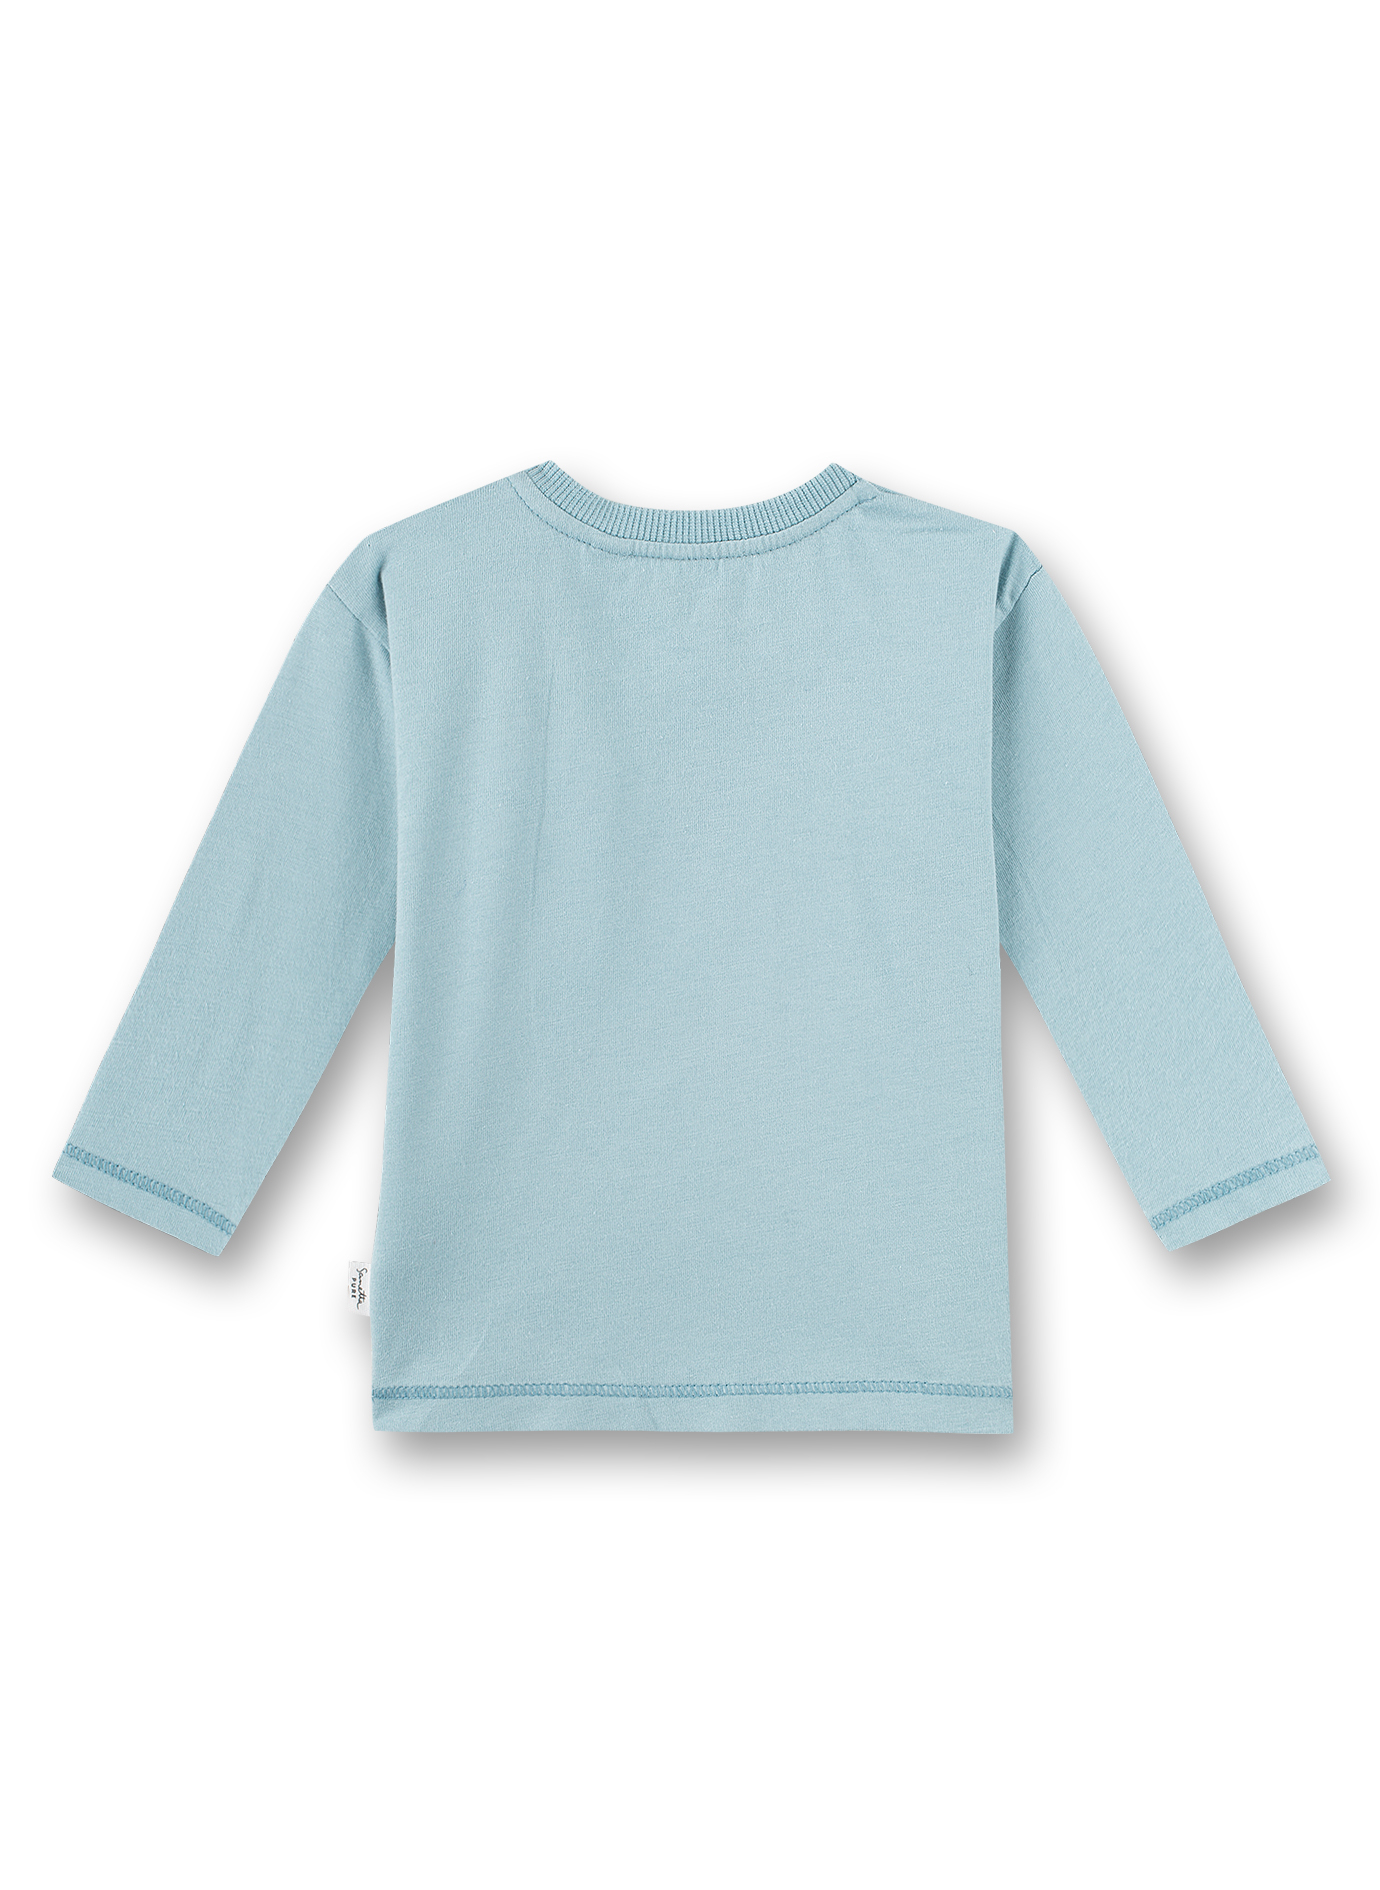 Jungen-Shirt langarm Hellblau